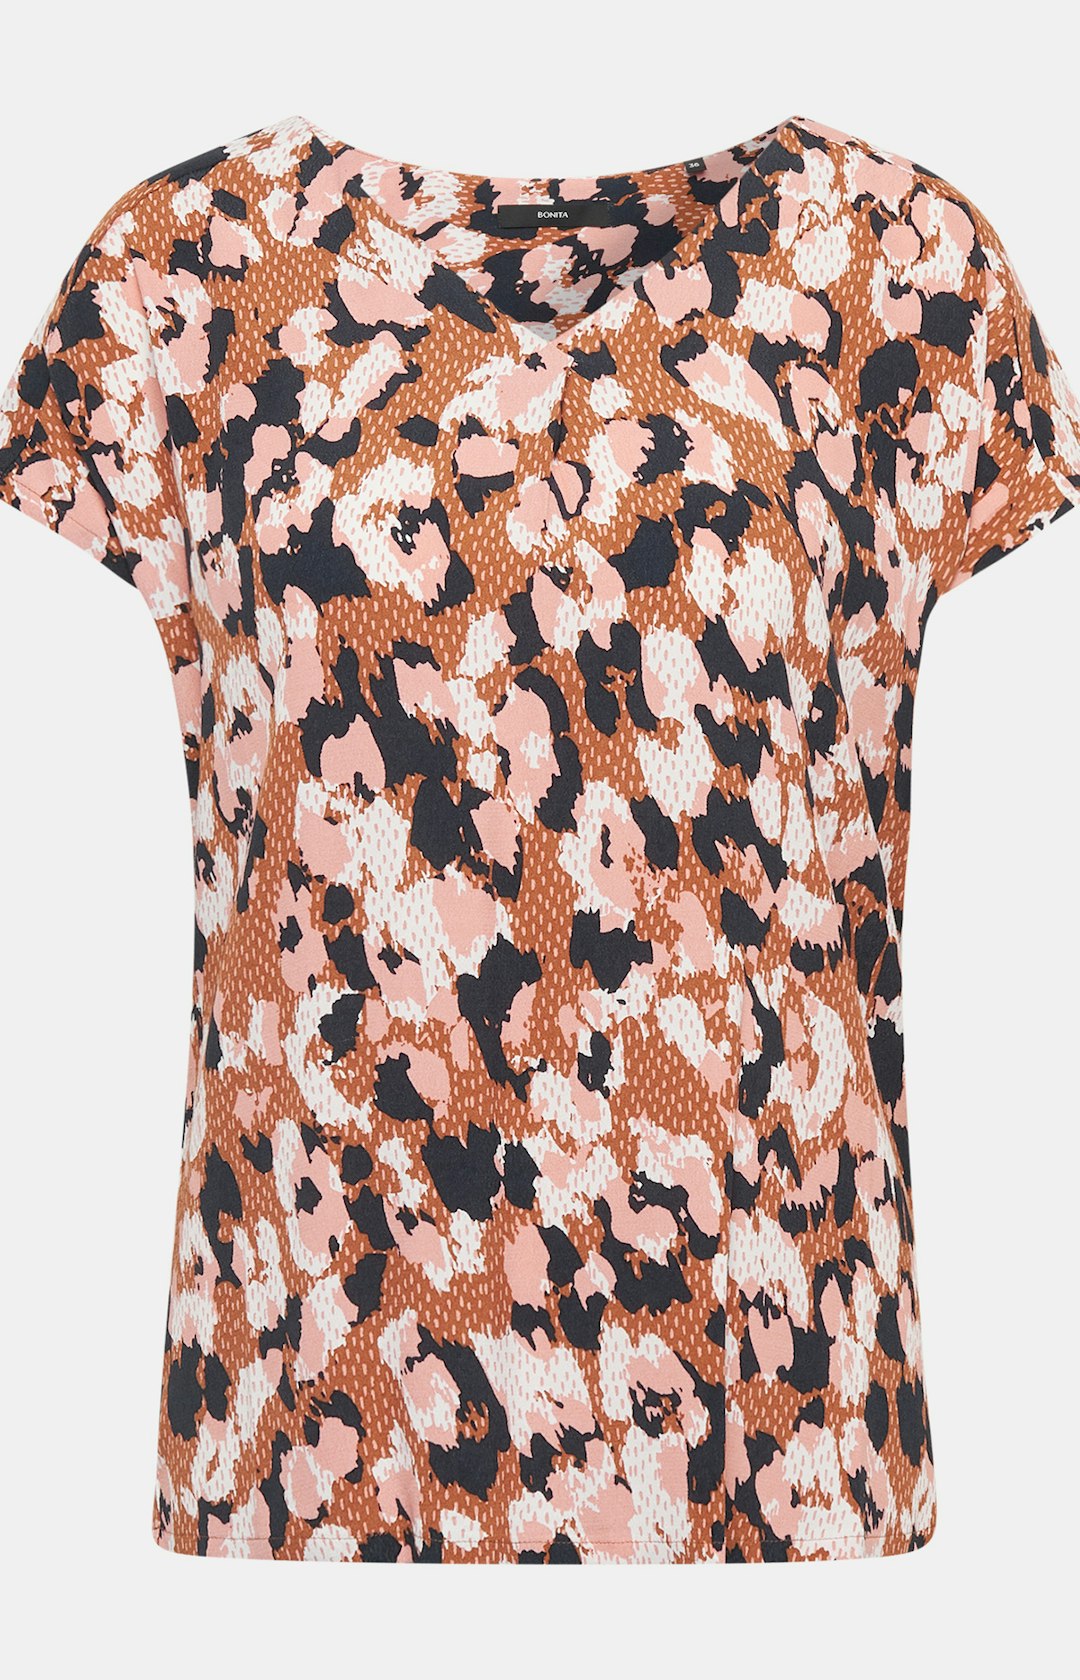 Shirtbluse mit Allover-Muster in Braun